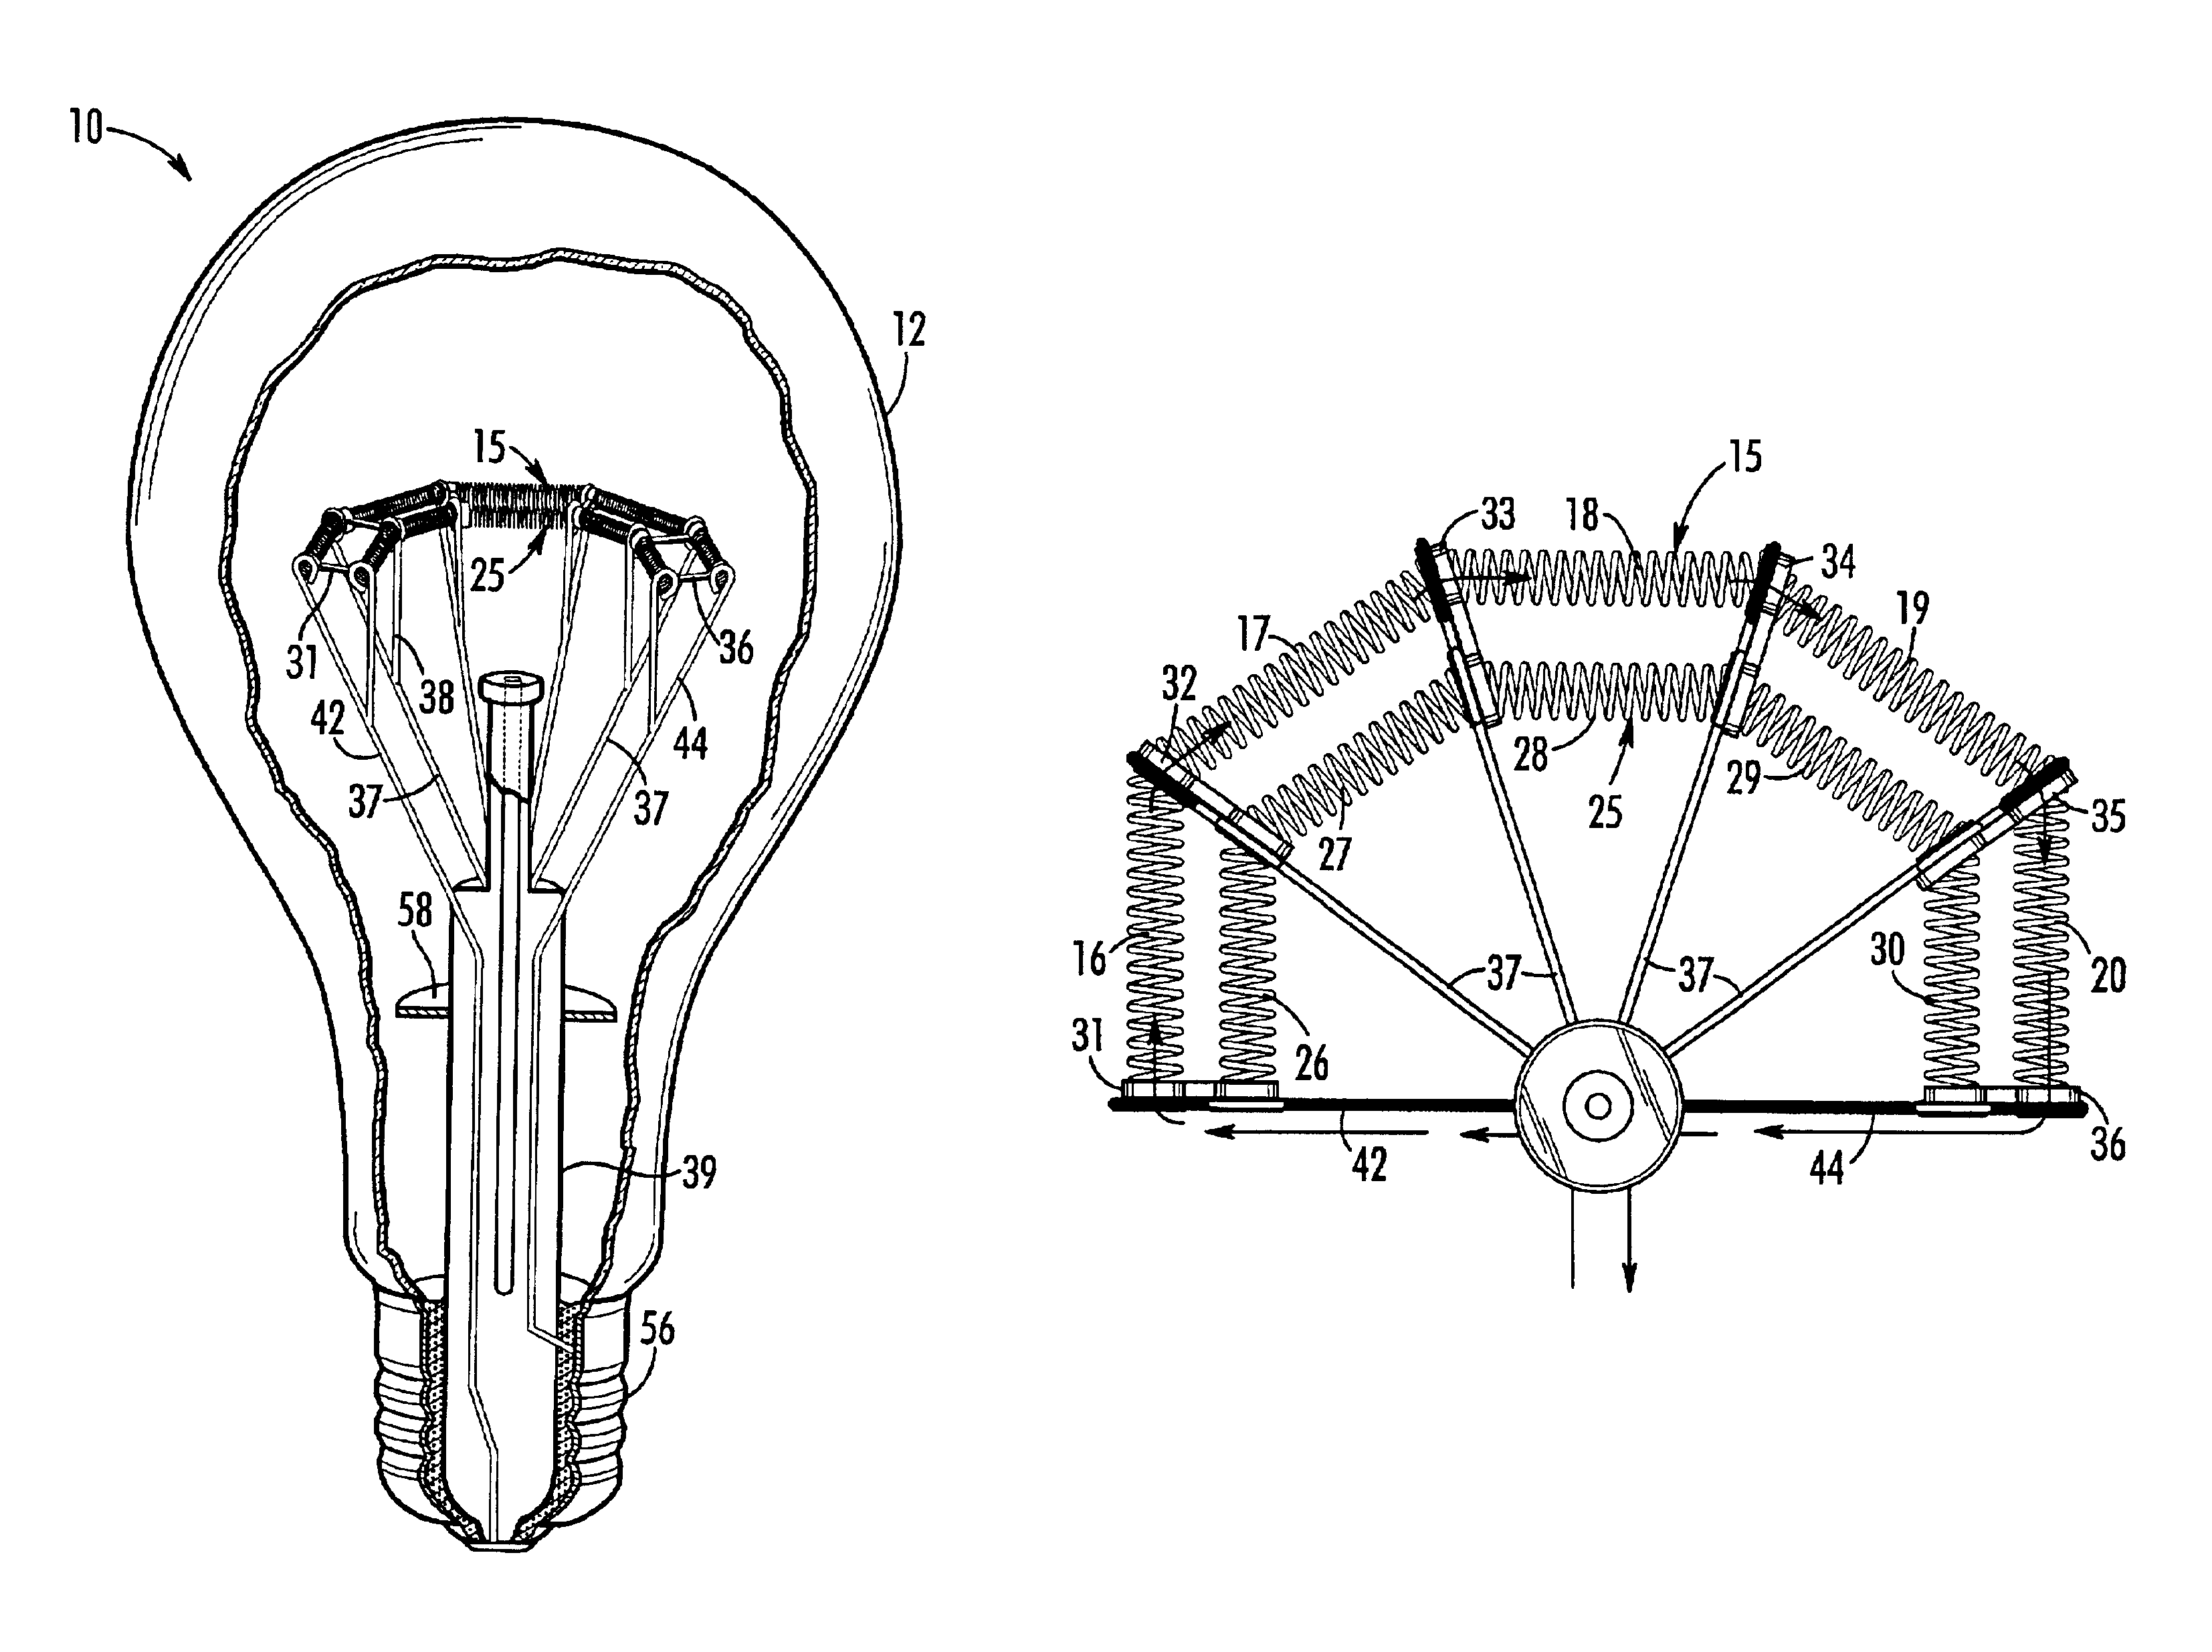 Multiple, parallel filament lamp